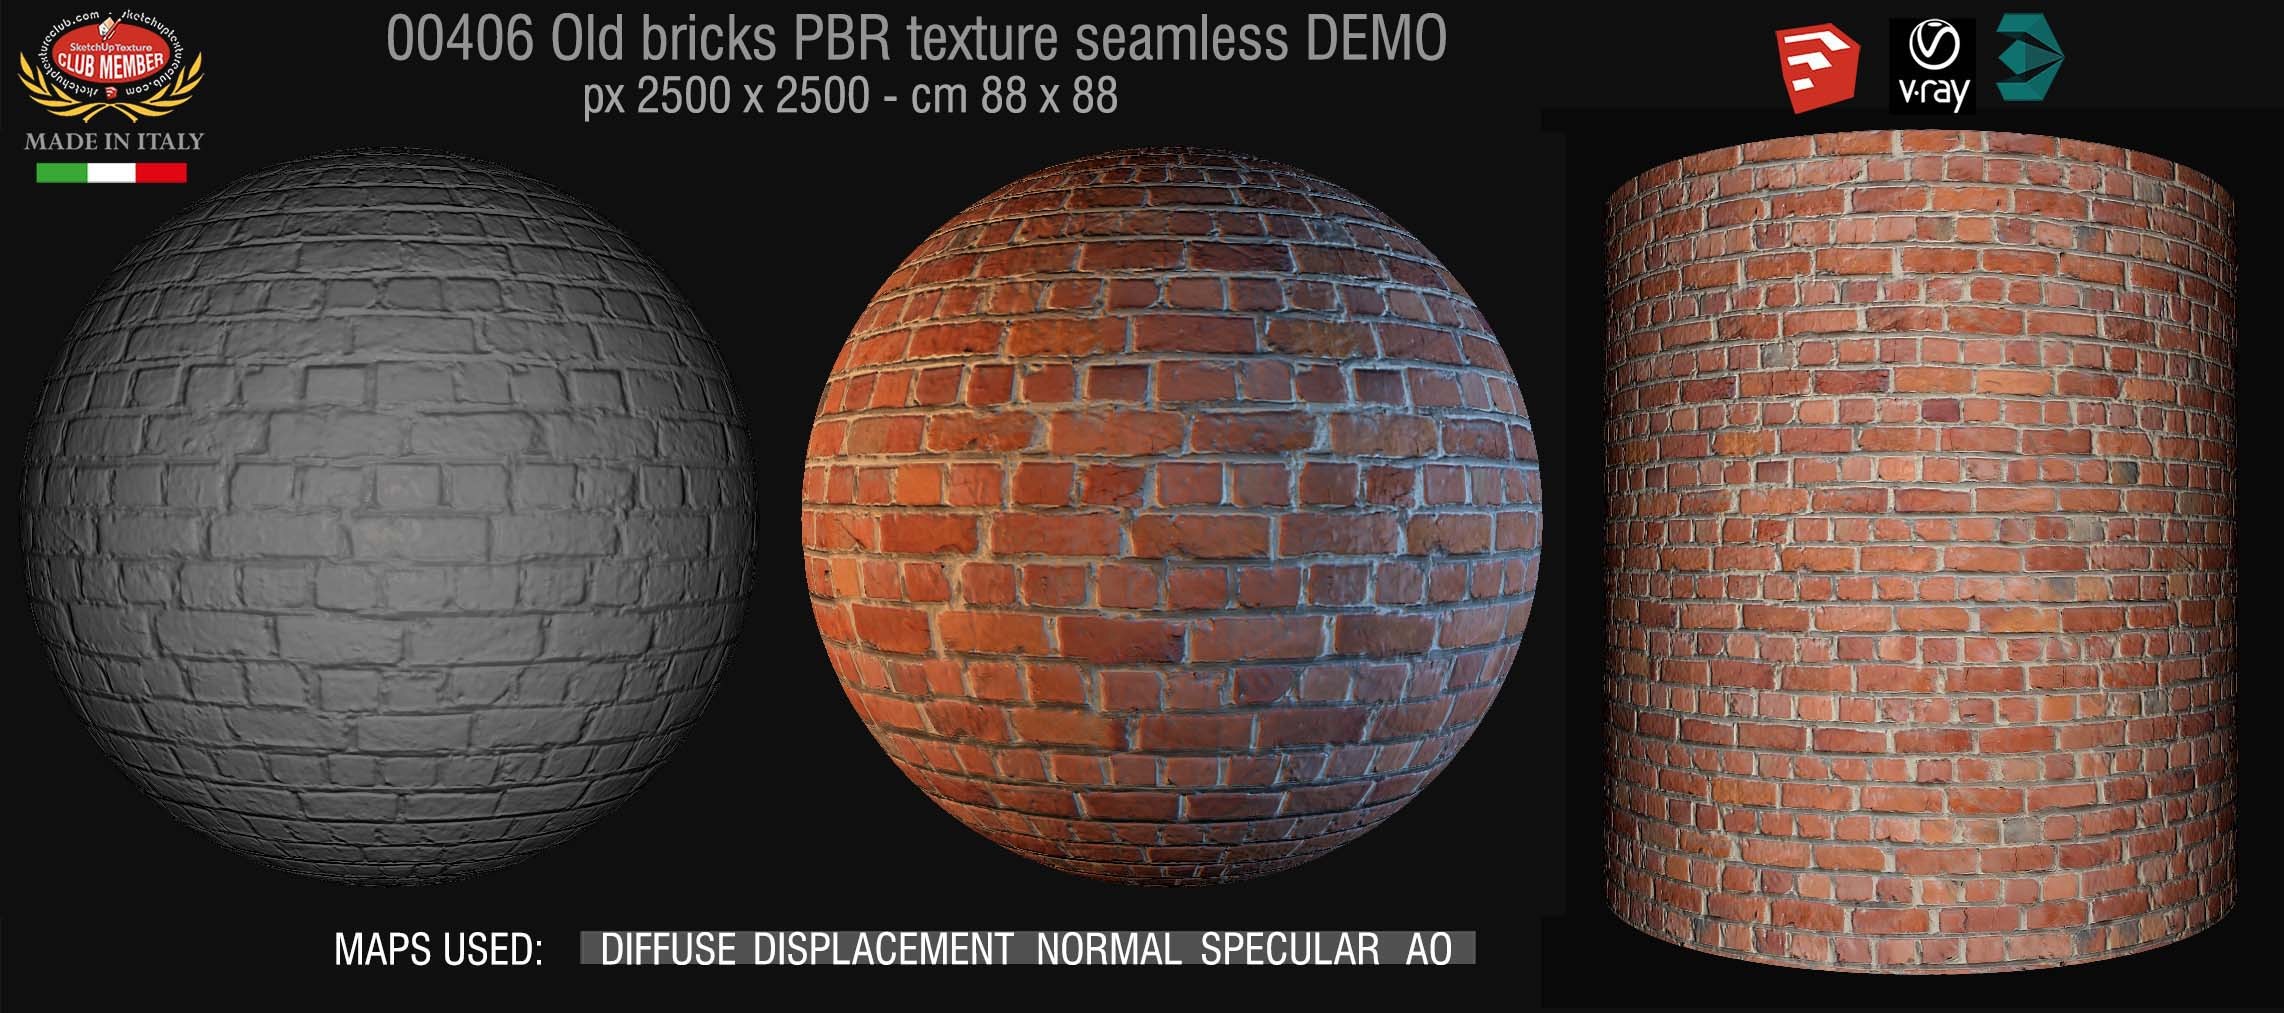 00406 Old bricks PBR texture seamless DEMO